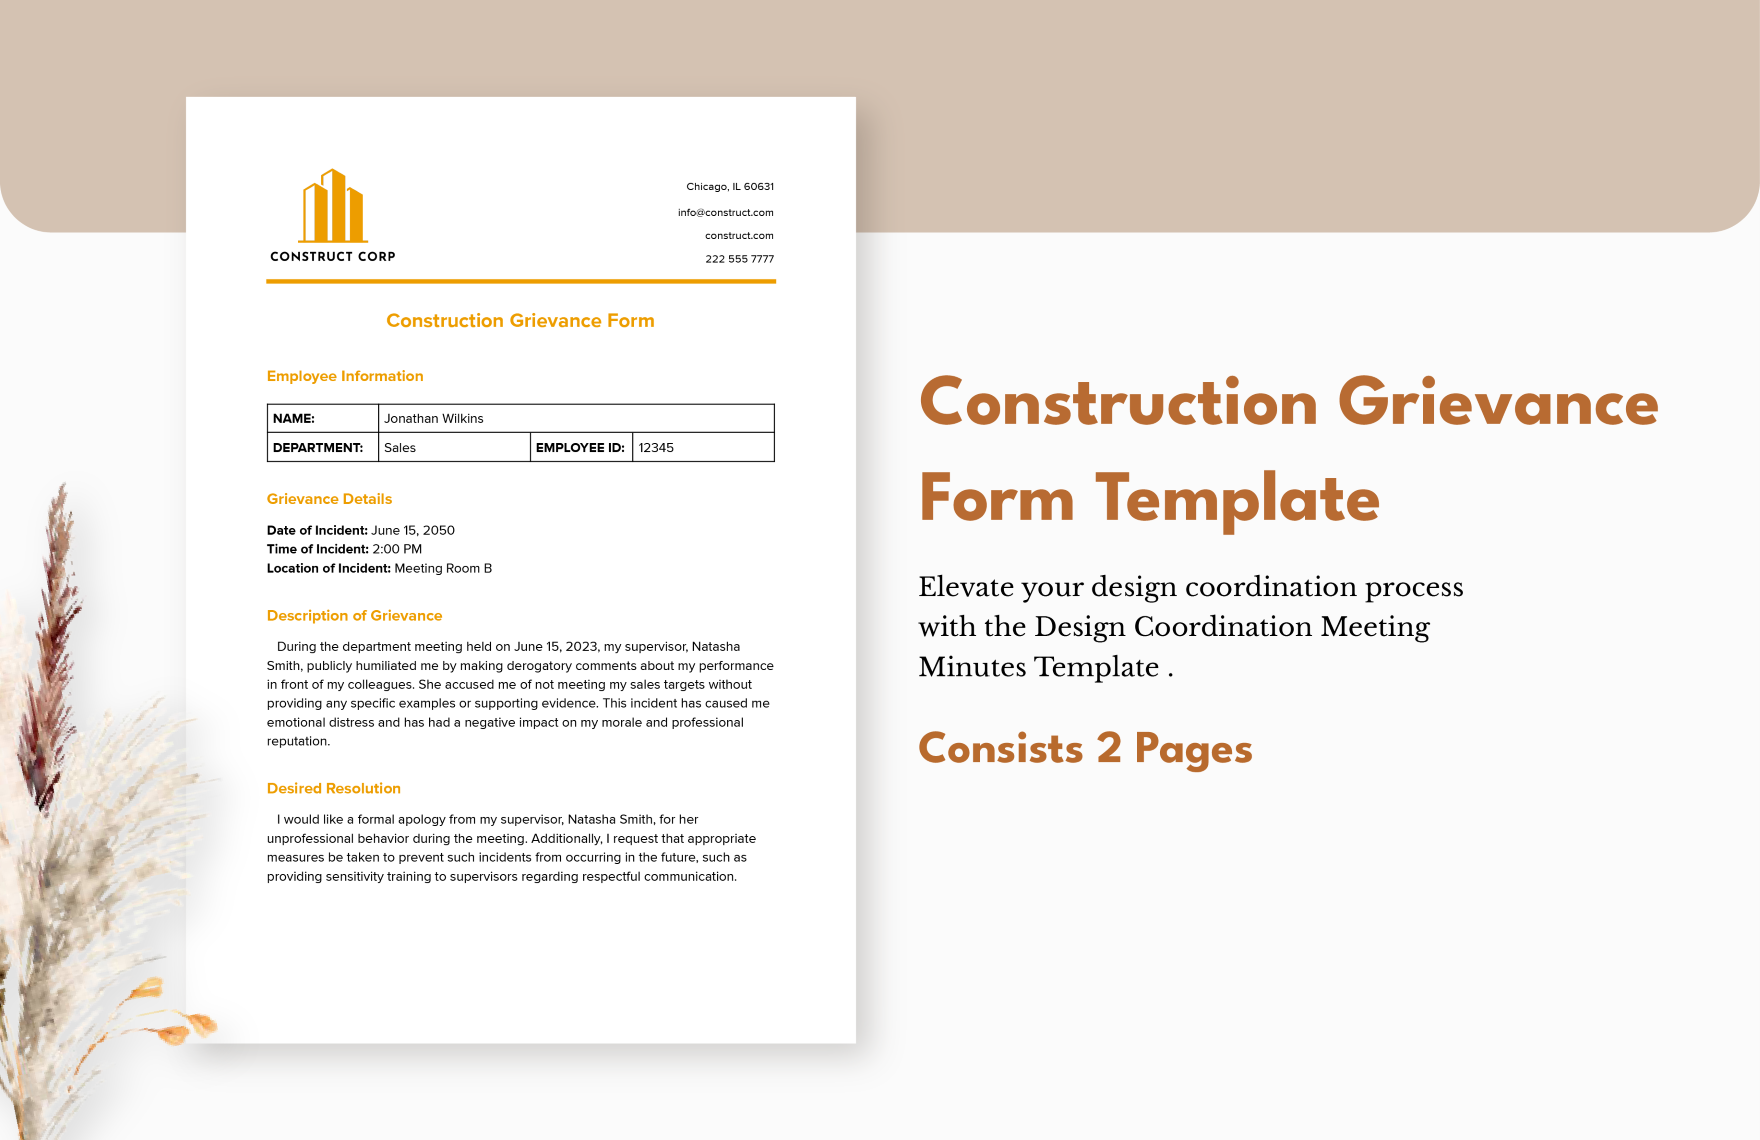 Construction Grievance Form Template